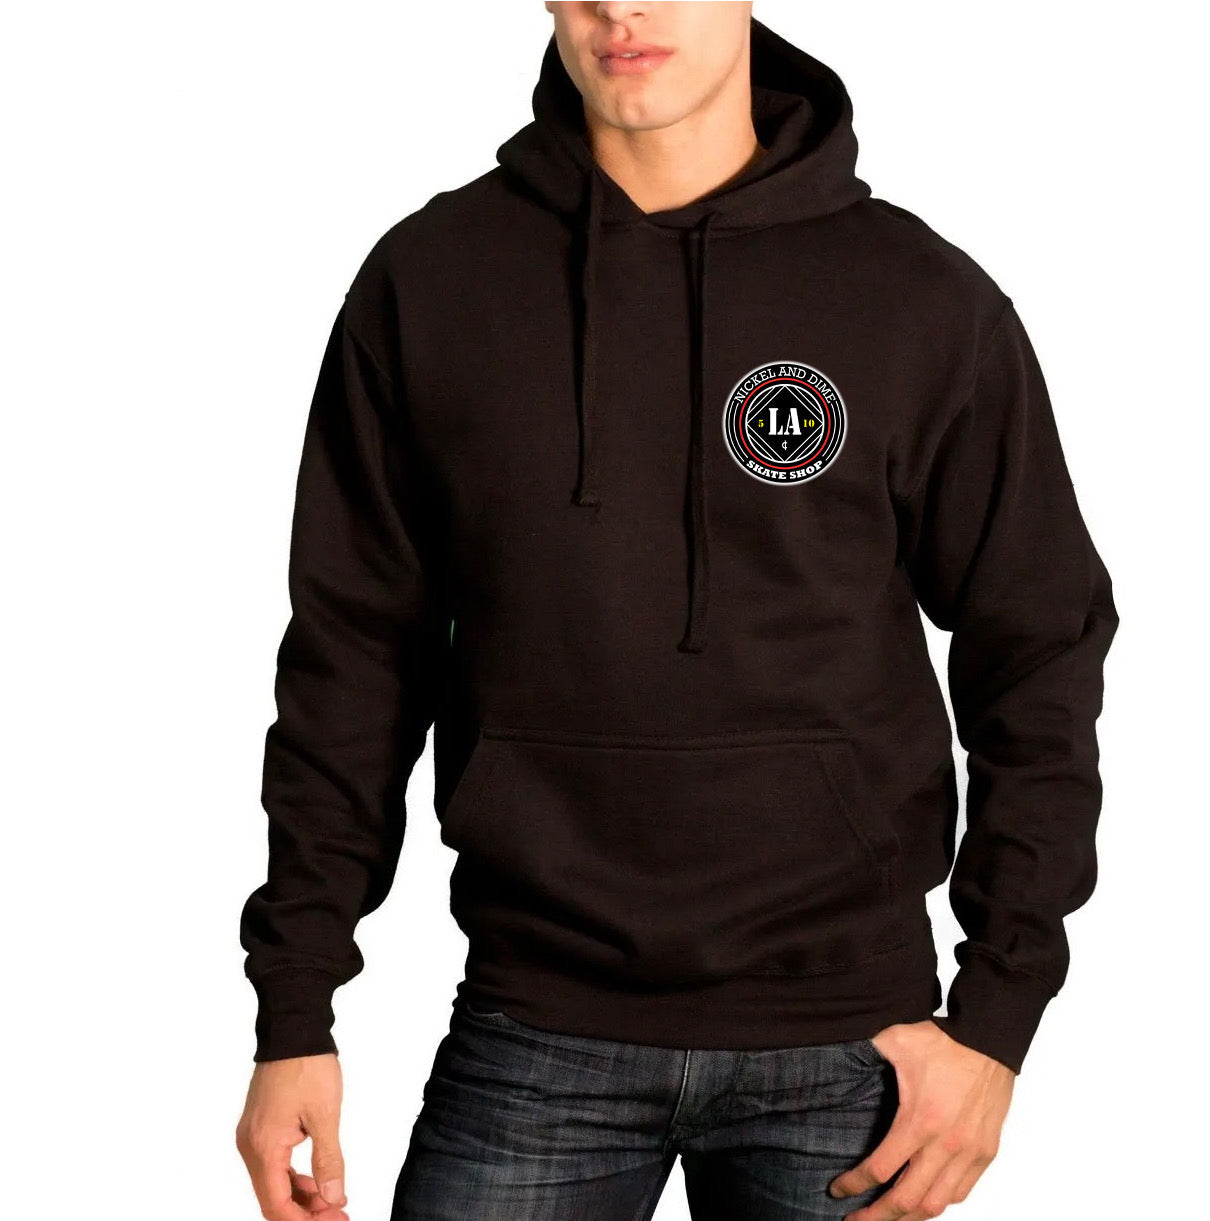 Nickel and Dime skate shop OG logo black hoodie